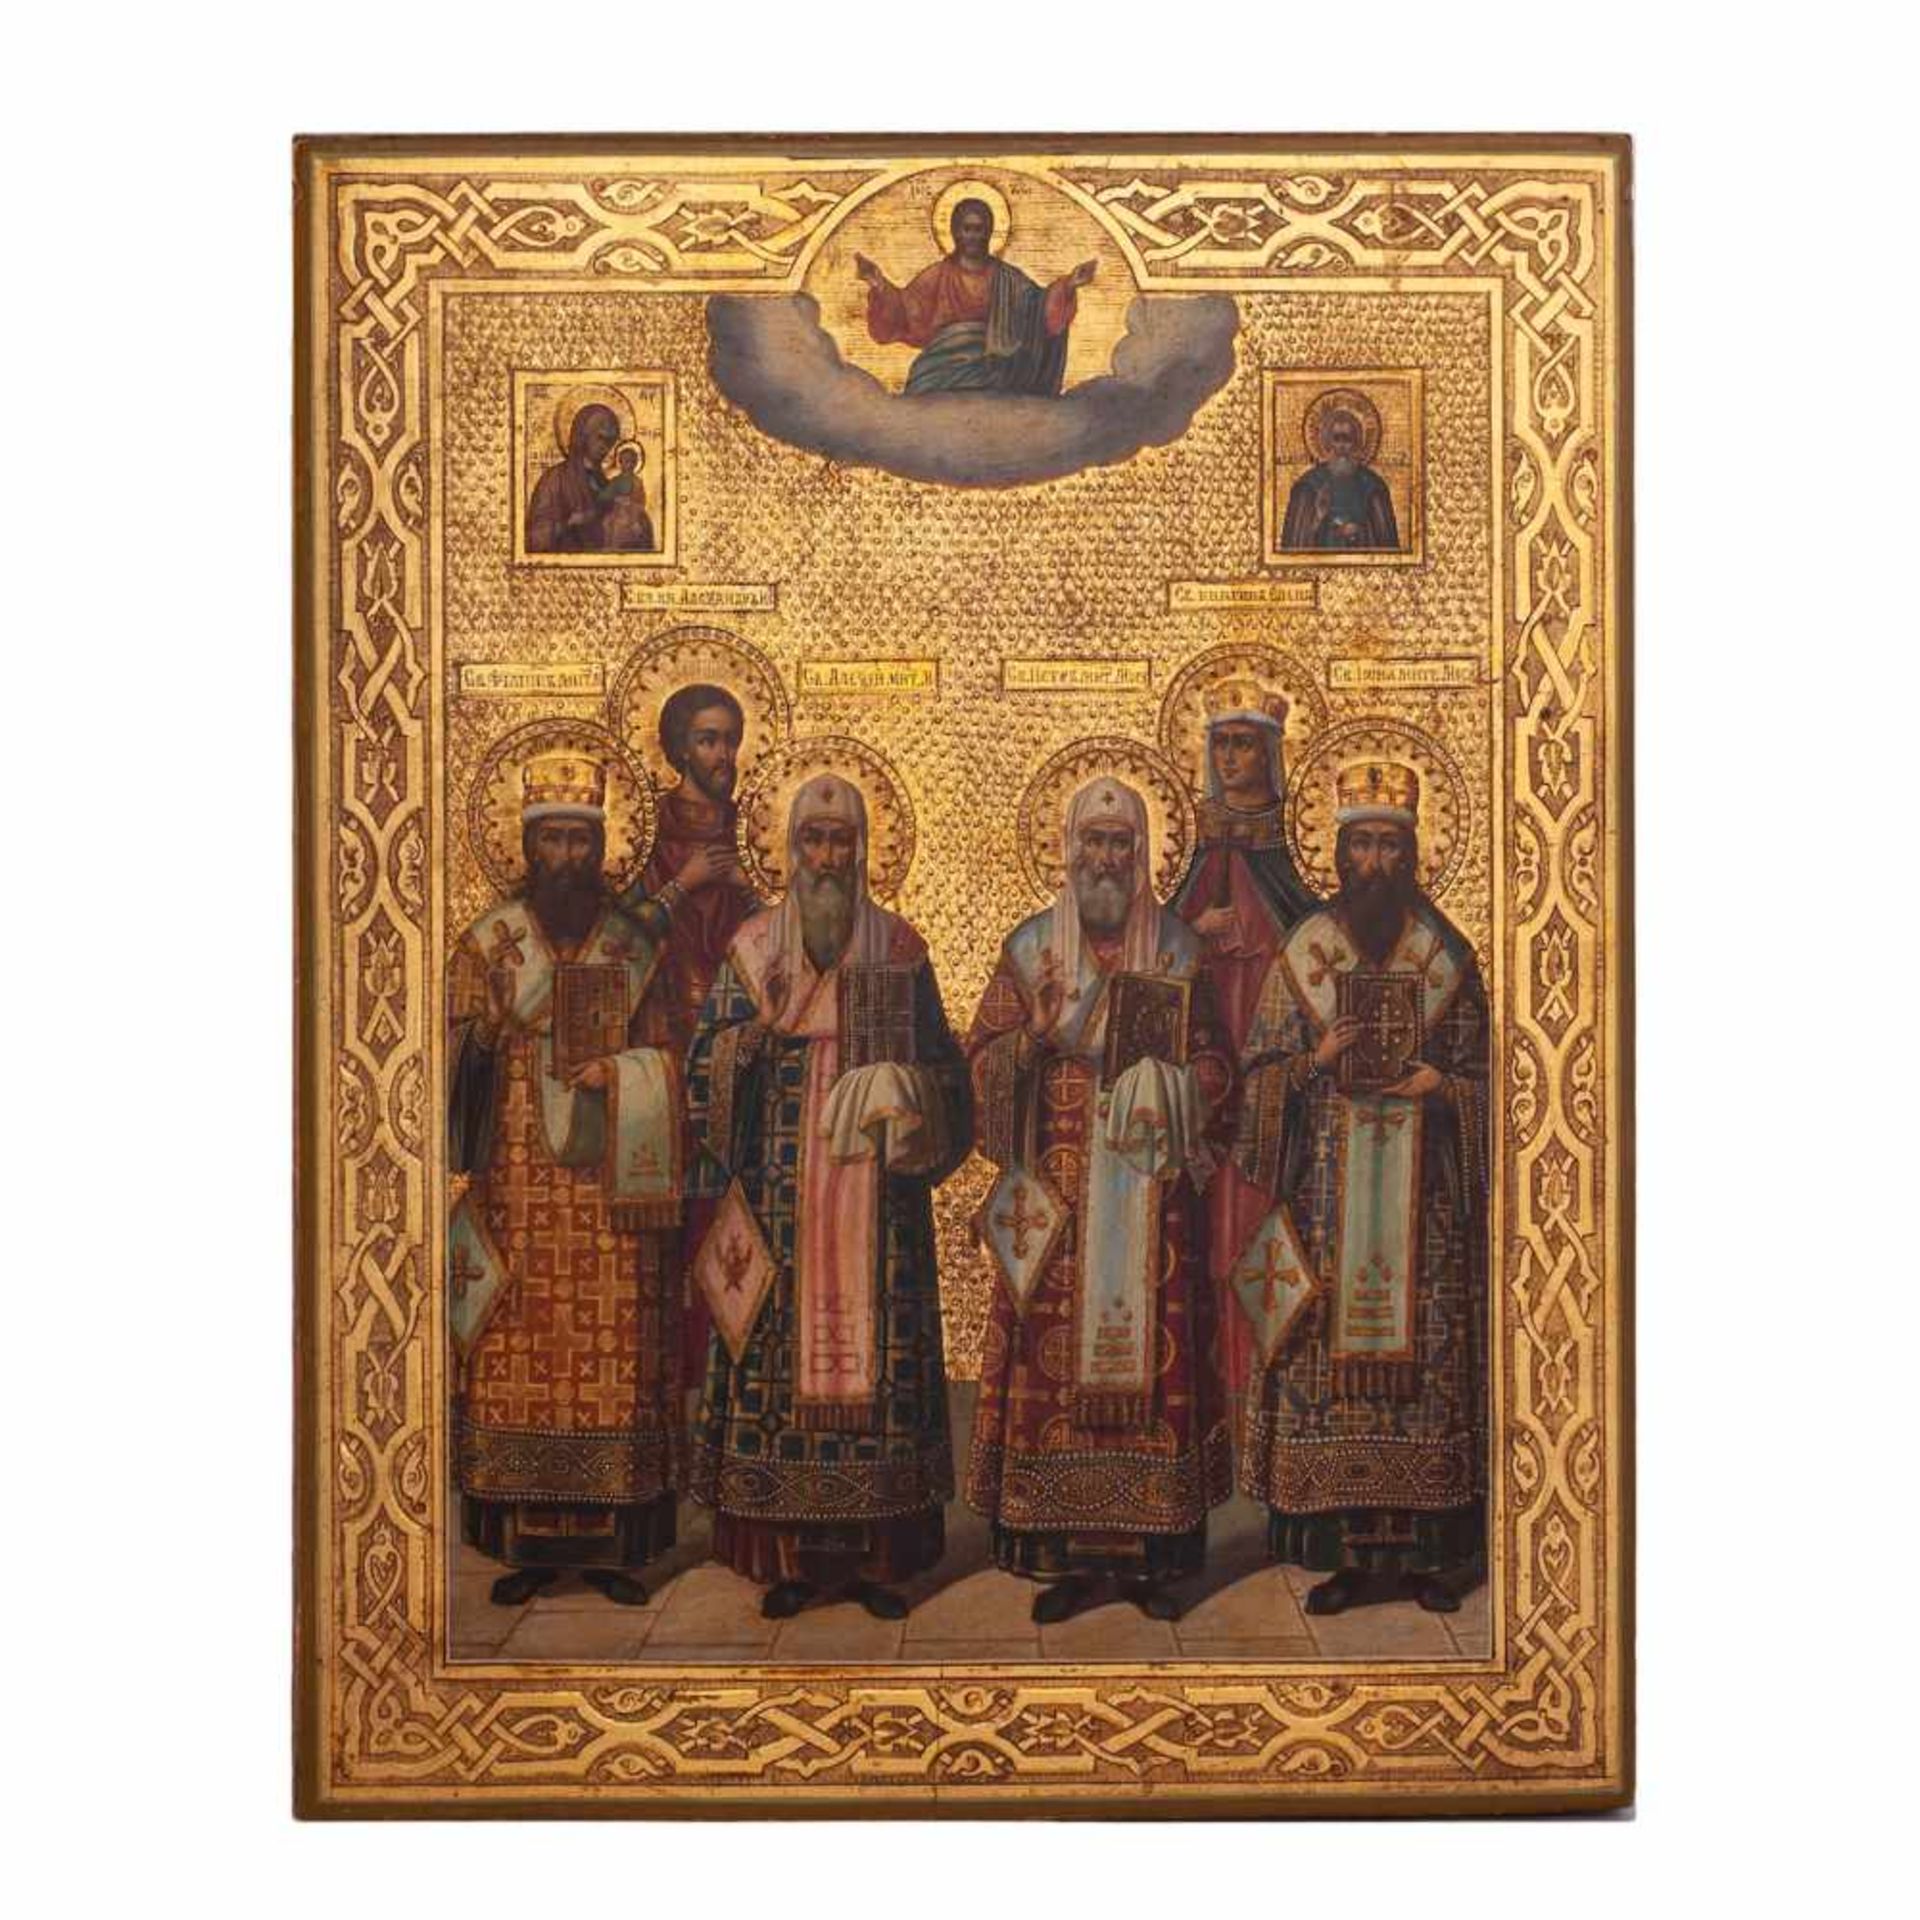 A Russian icon of the Chosen SaintsA Russian icon of the Chosen Saints with the honorable Moscow